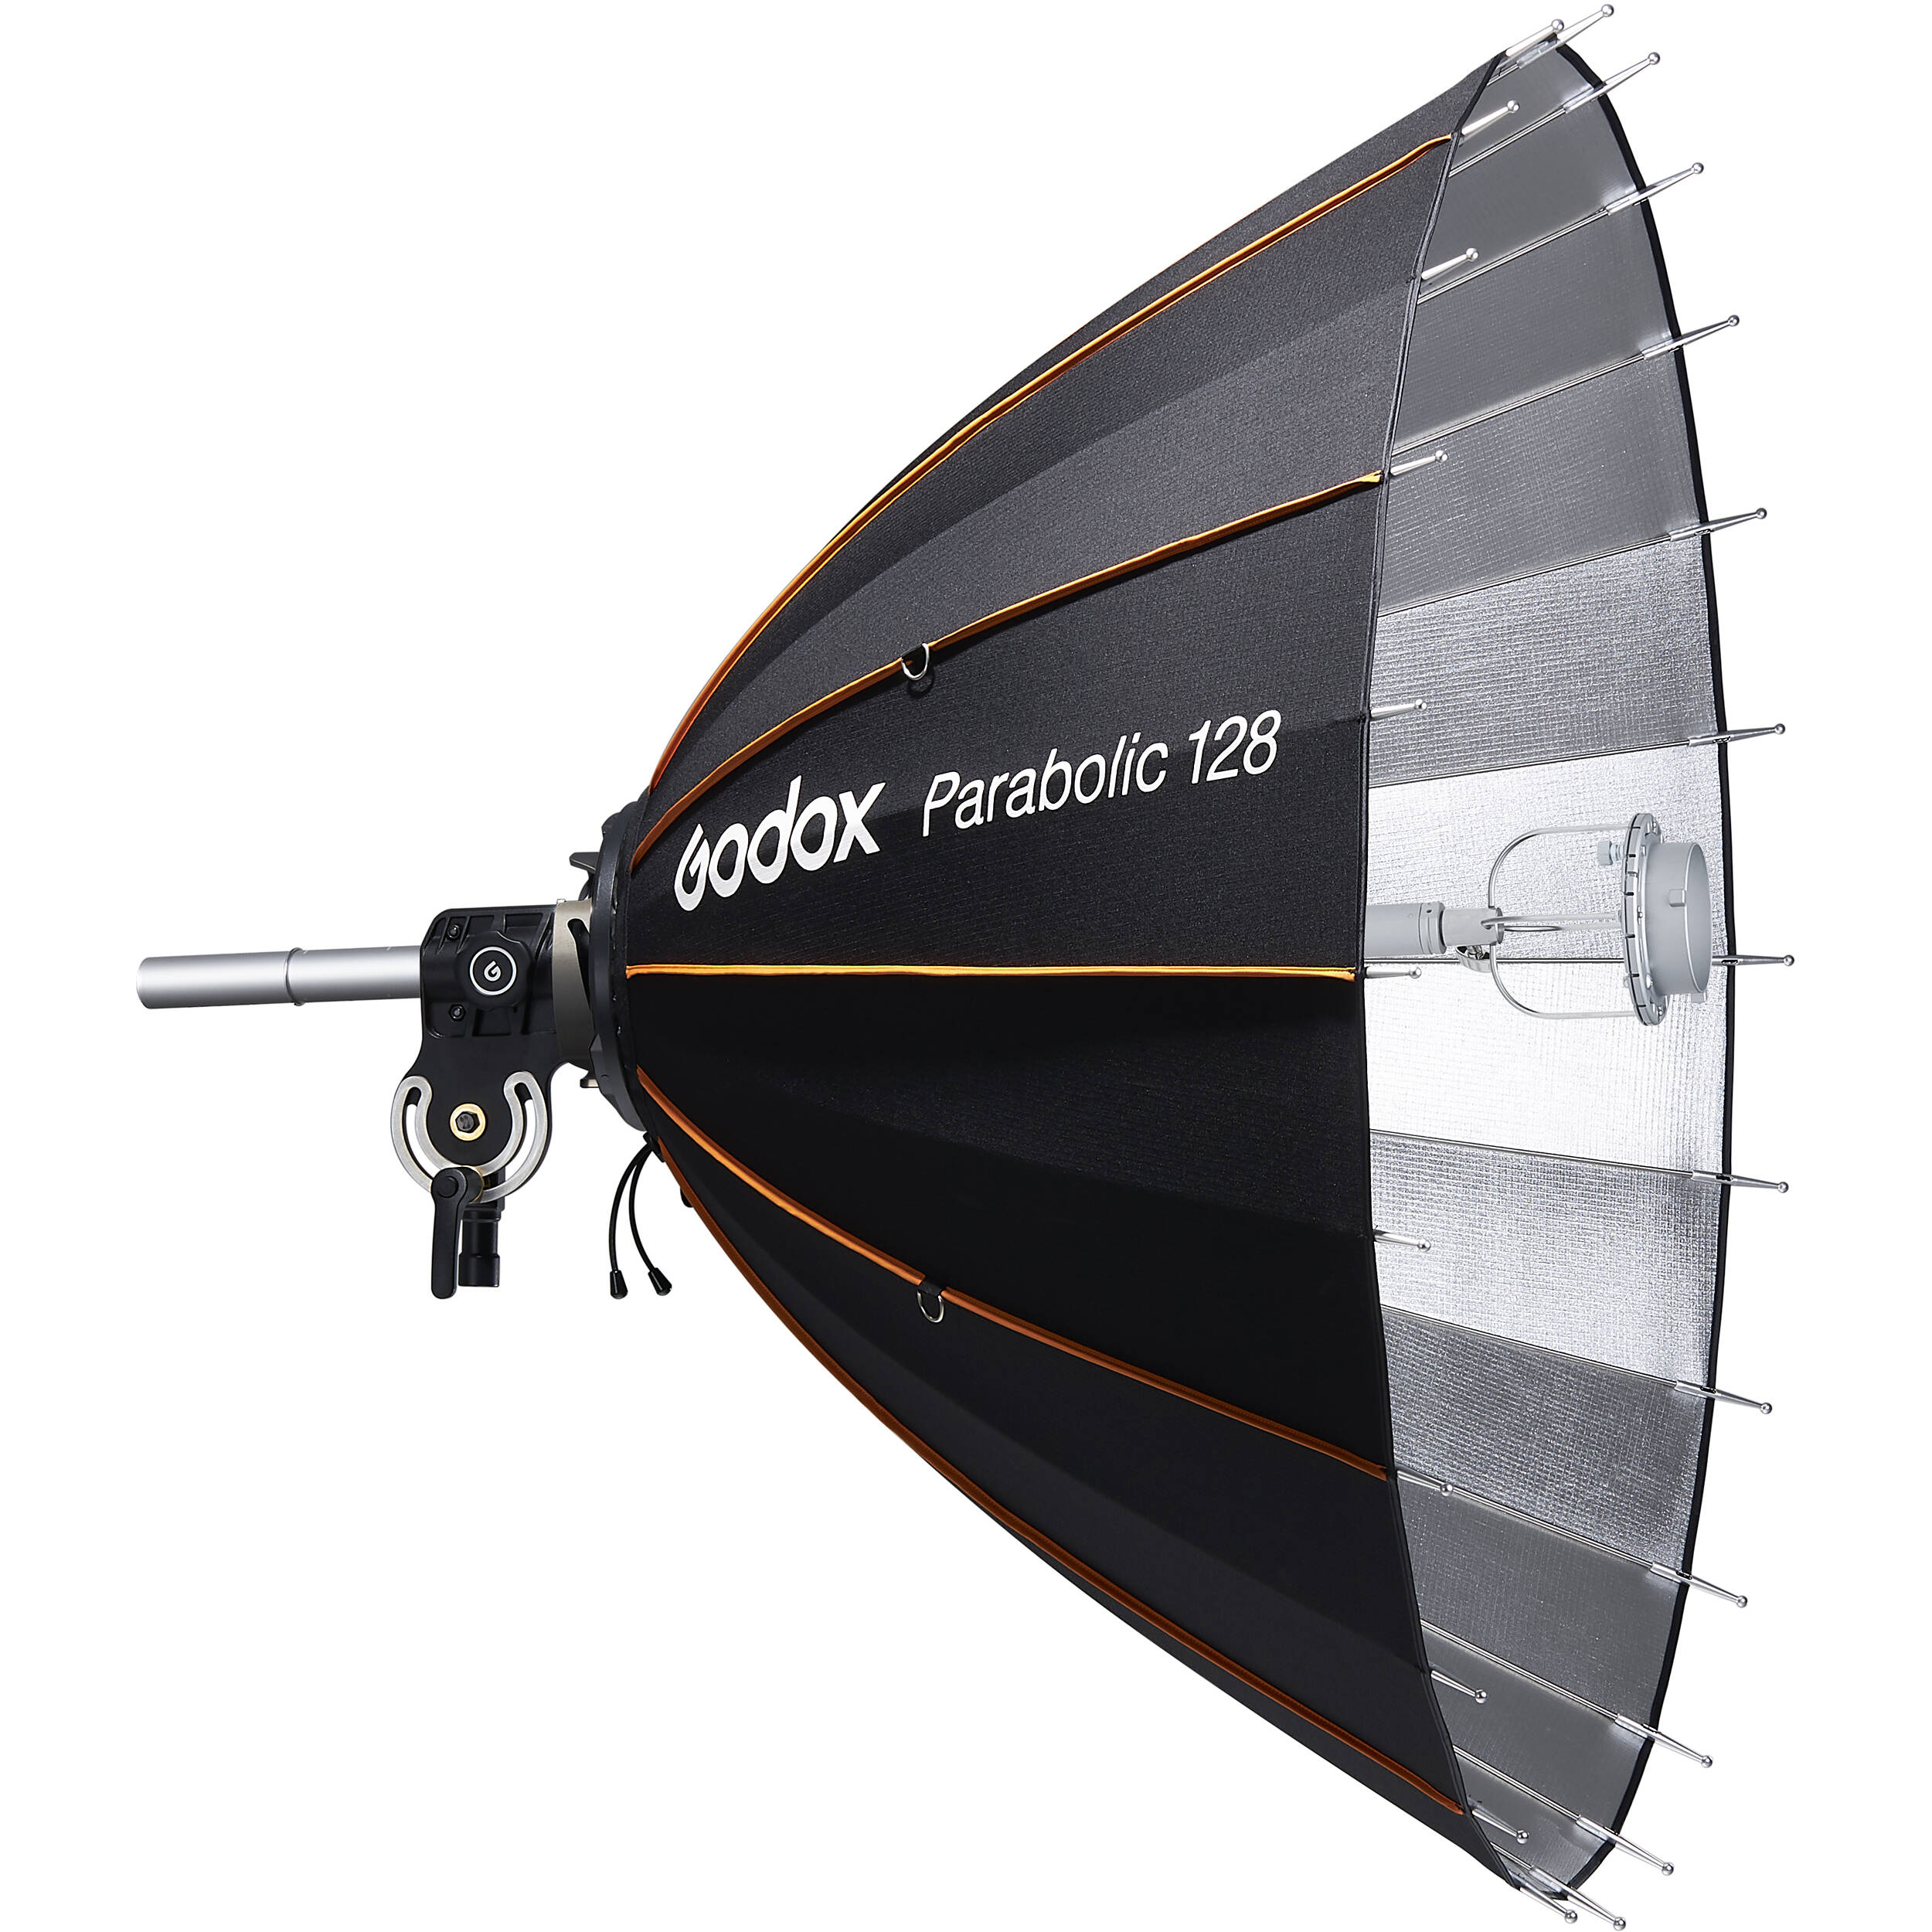    Godox Parabolic P128Kit    Ultra-mart